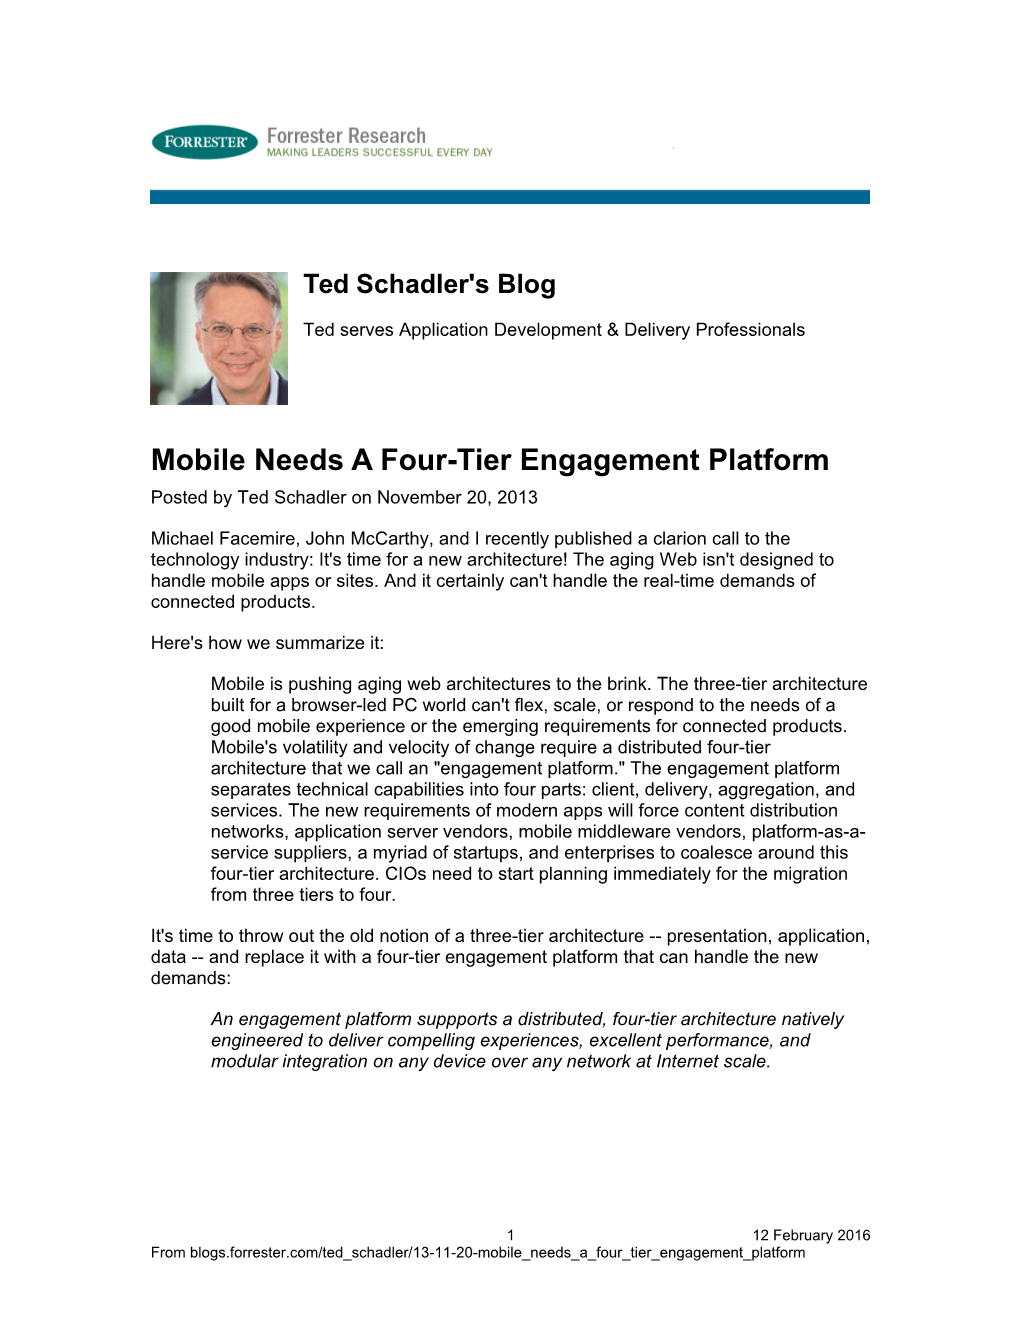 Mobile Needs a Four-Tier Engagement Platform